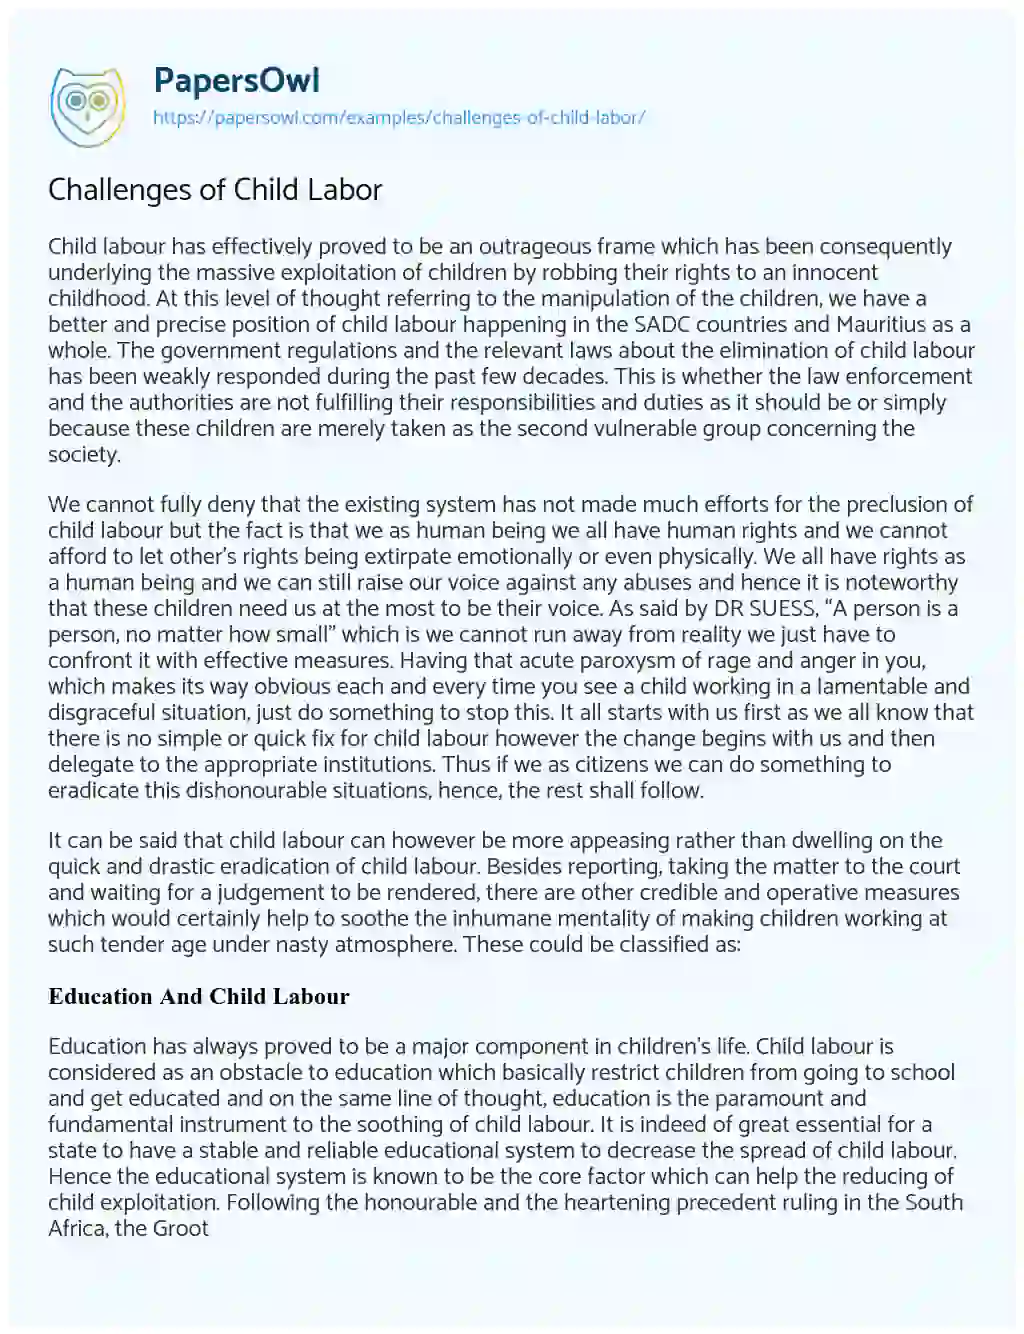 Essay on Challenges of Child Labor